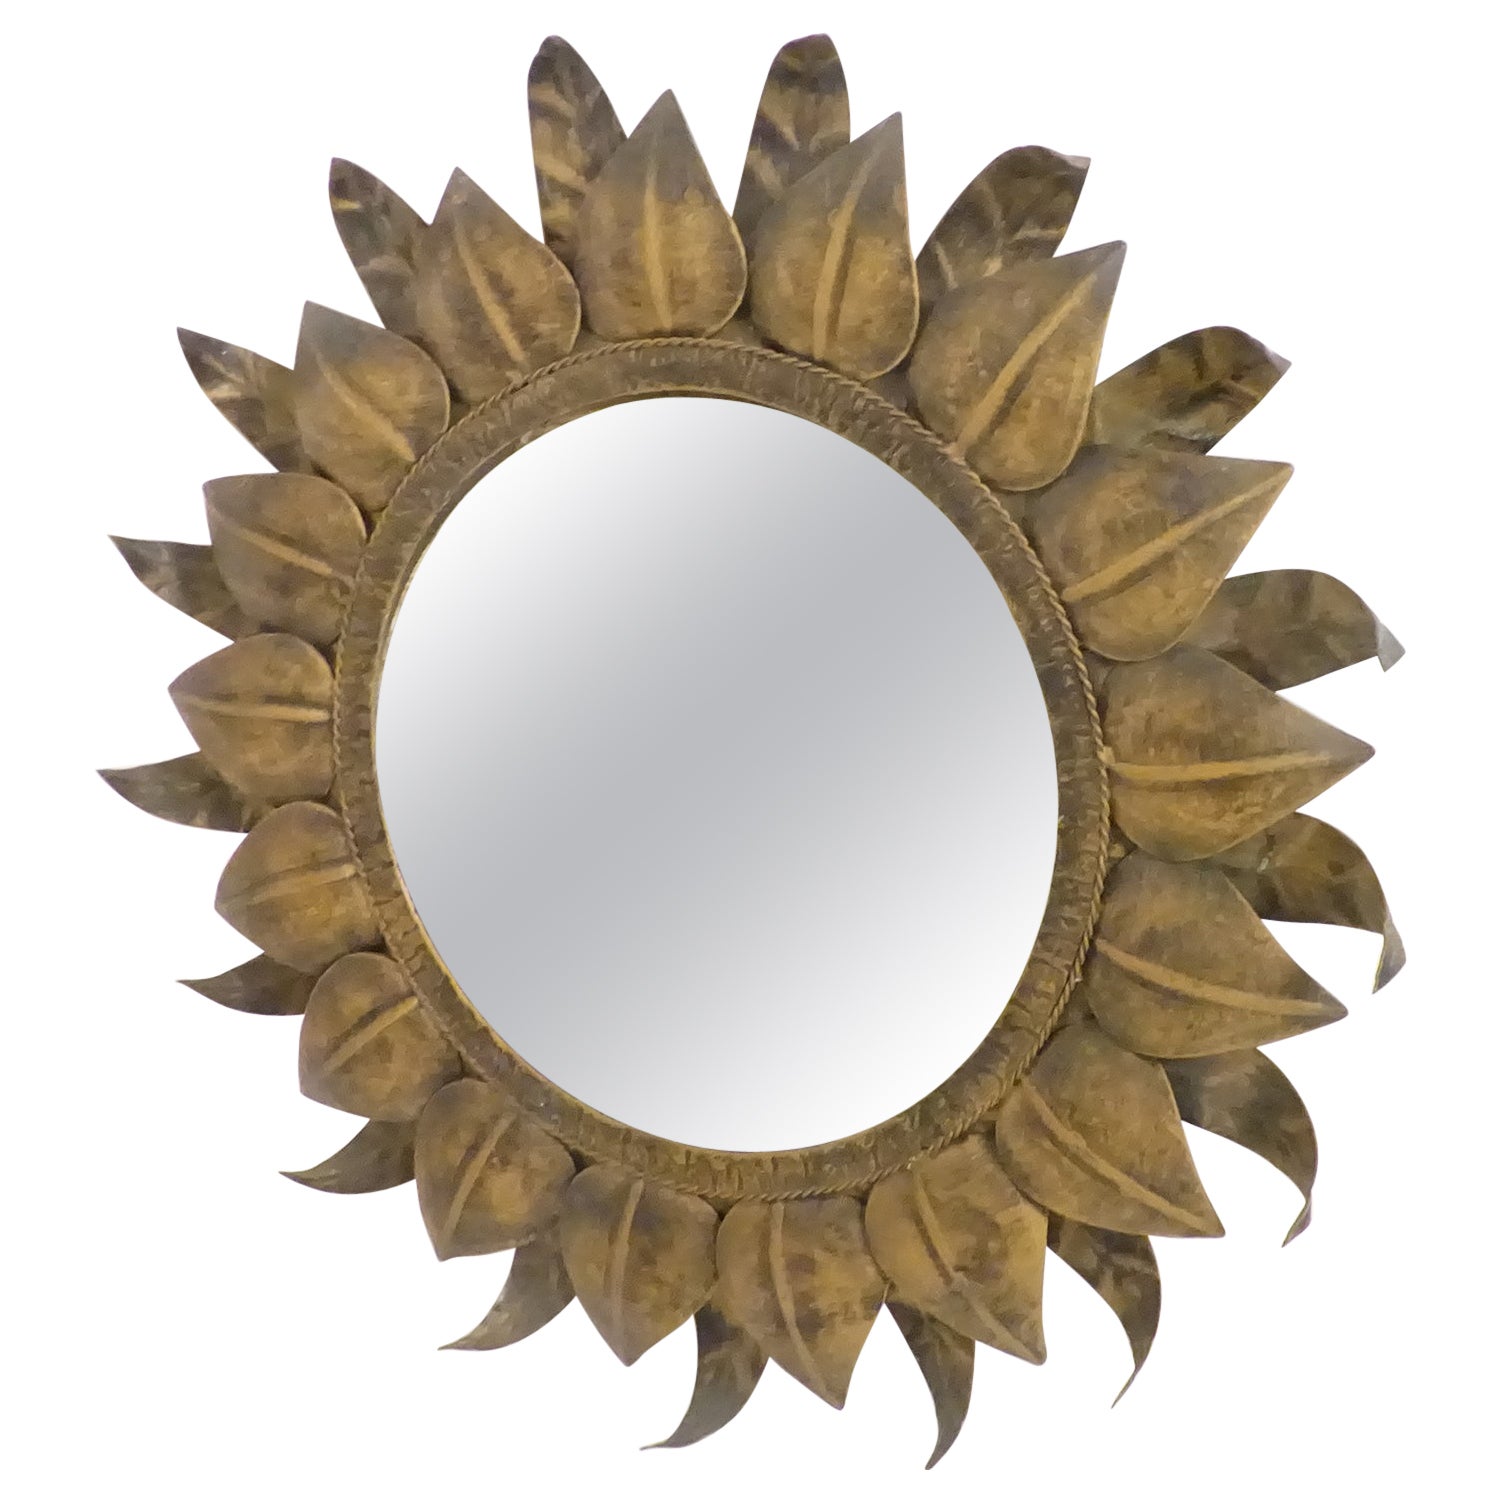 Spanish midcentury round metal mirror, 'circa 1960s